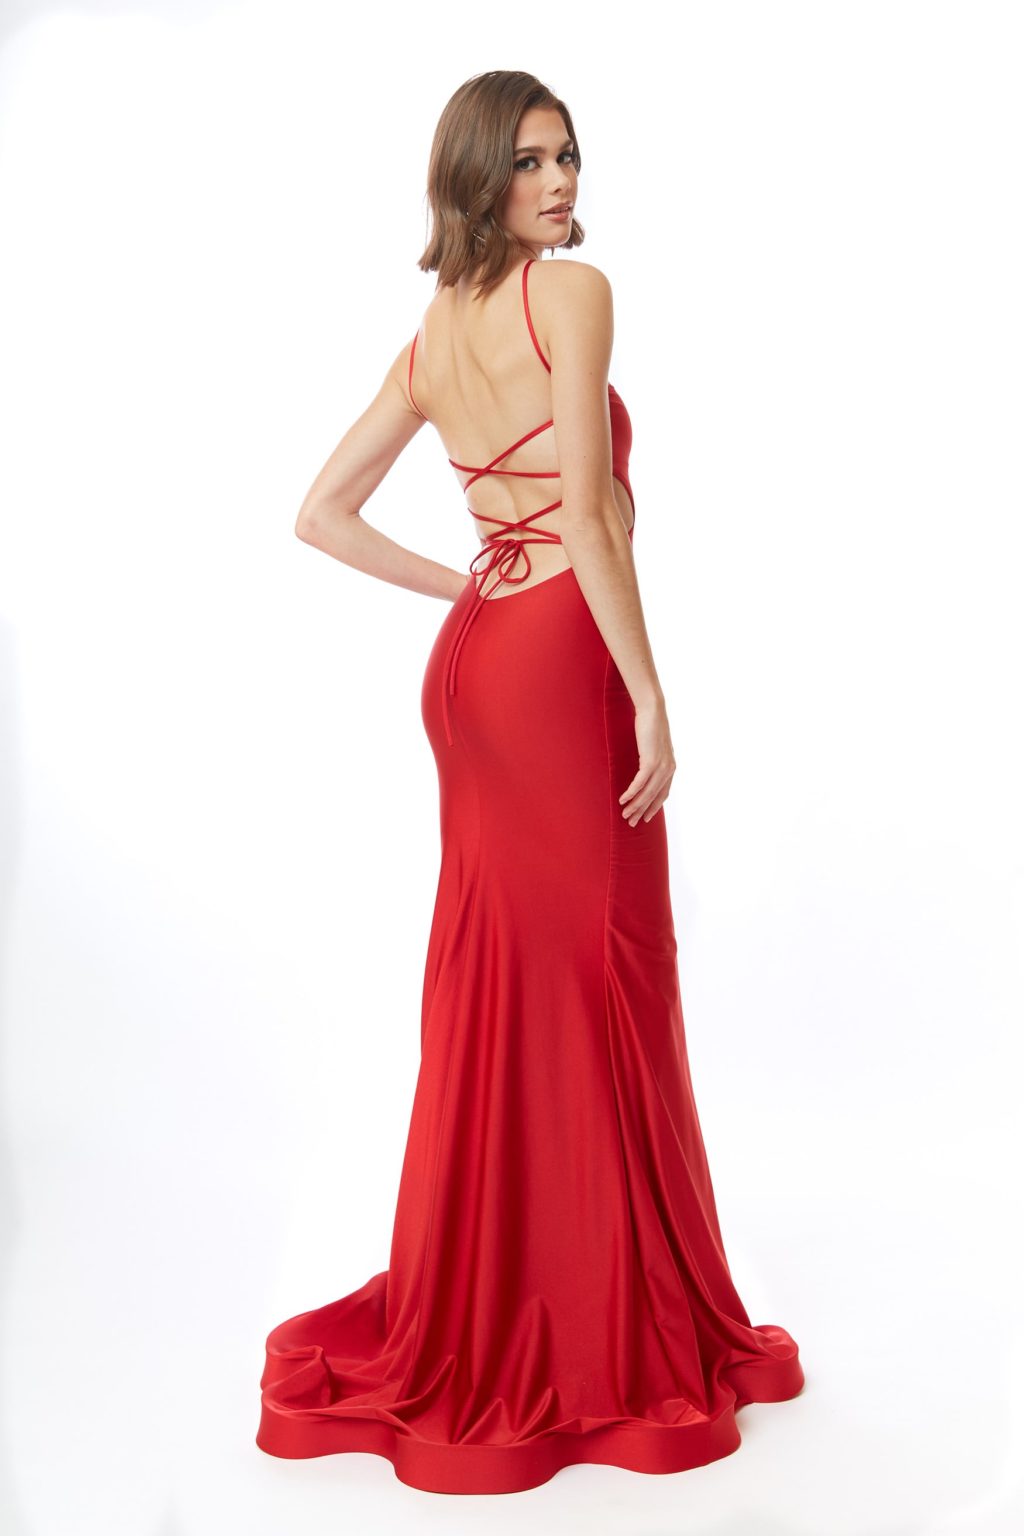 Atria 6708H red halter dress